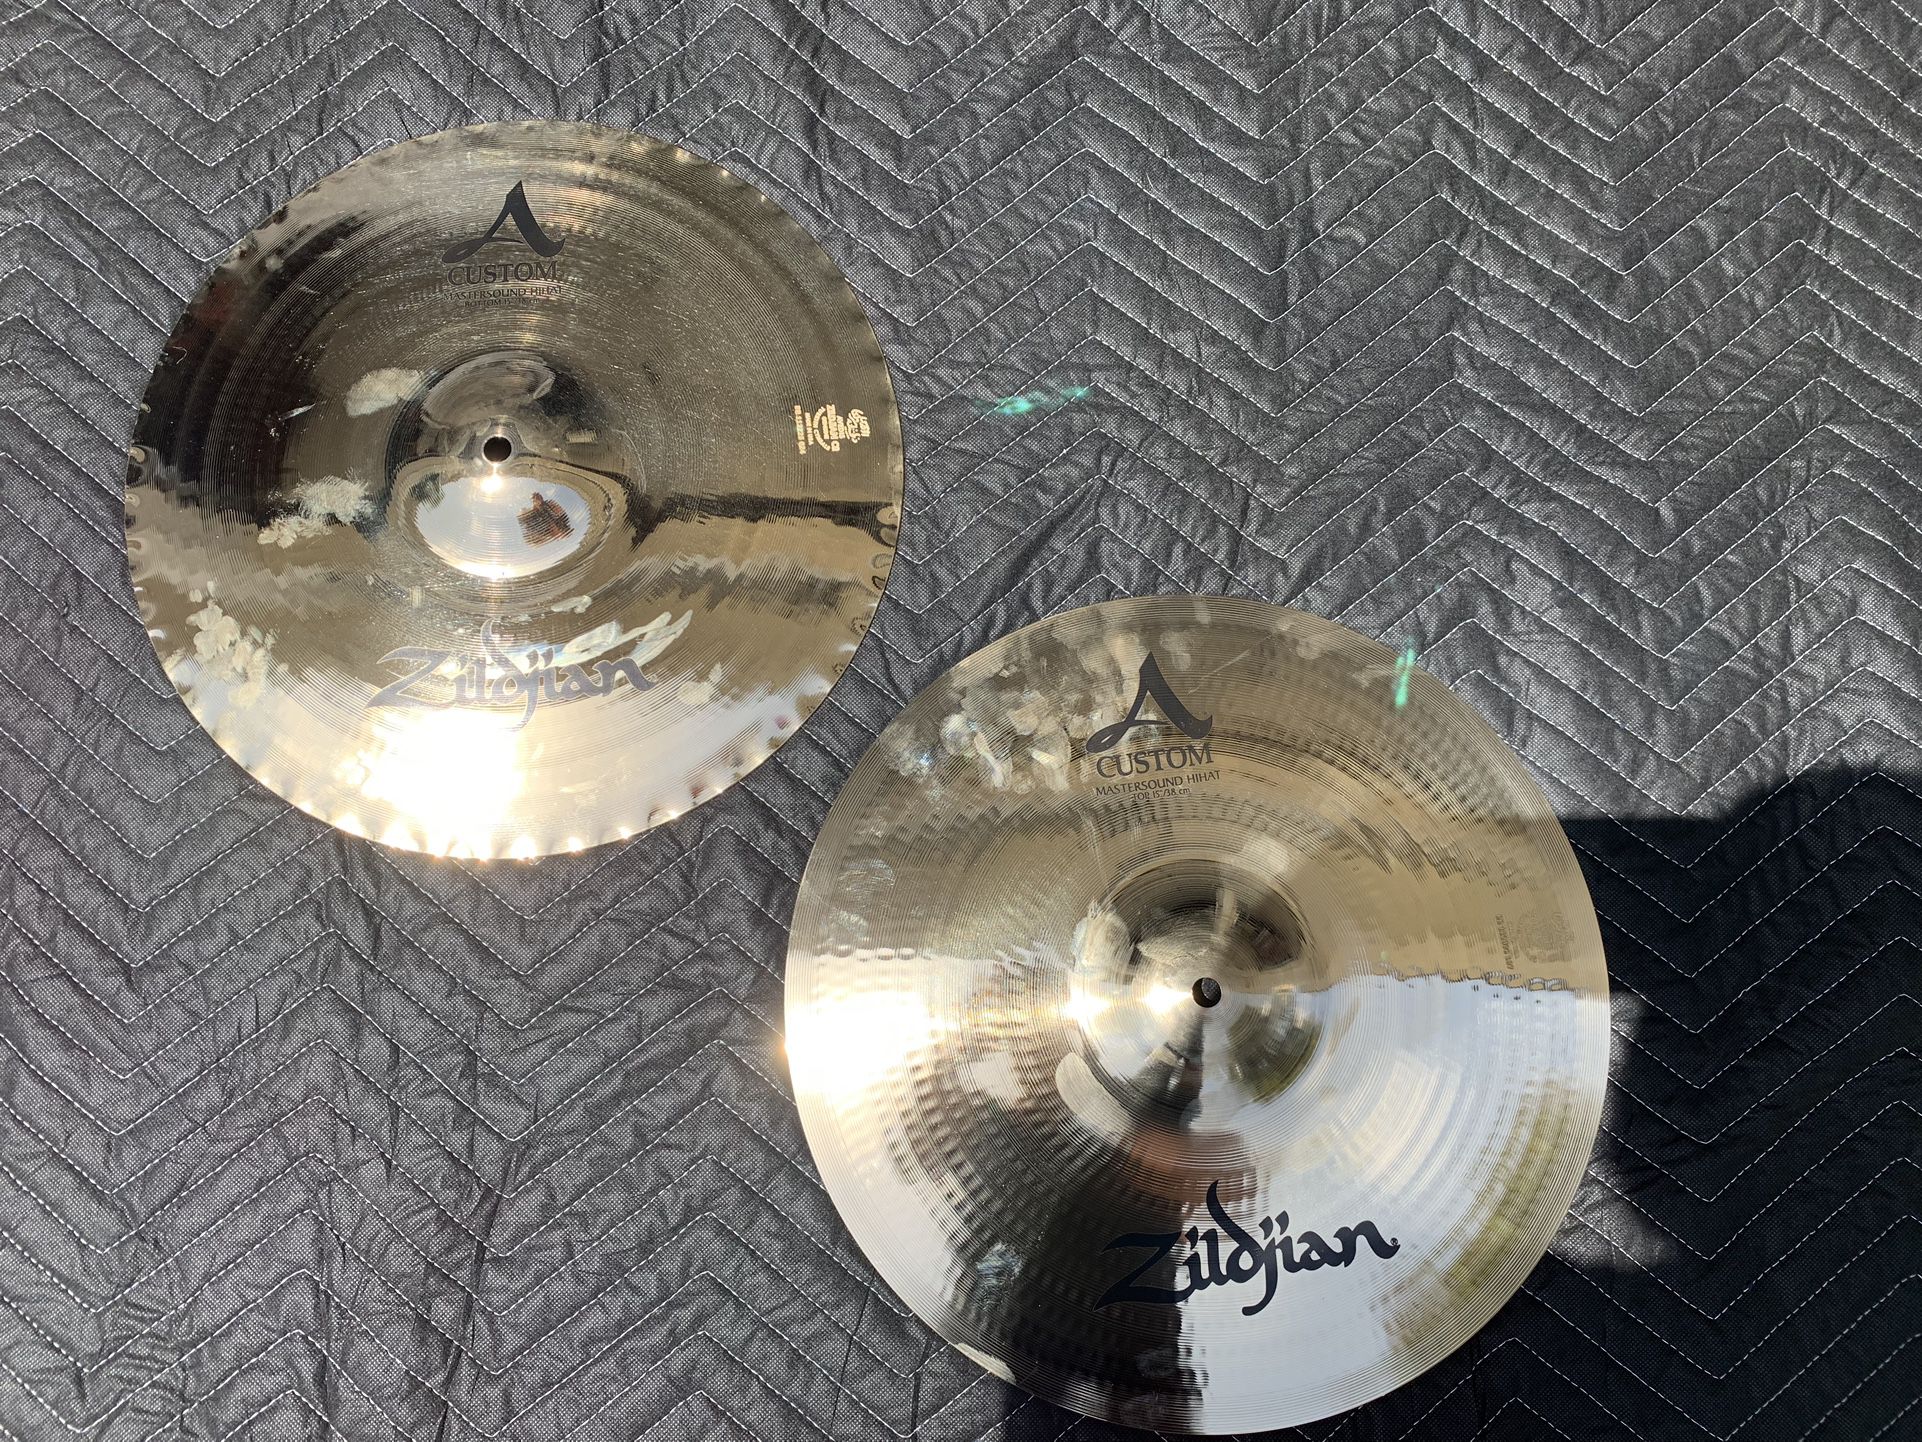 Zildjian A Custom Series 15” Mastersound Hi Hat Drum Cymbals BRAND NEW Retails for $539